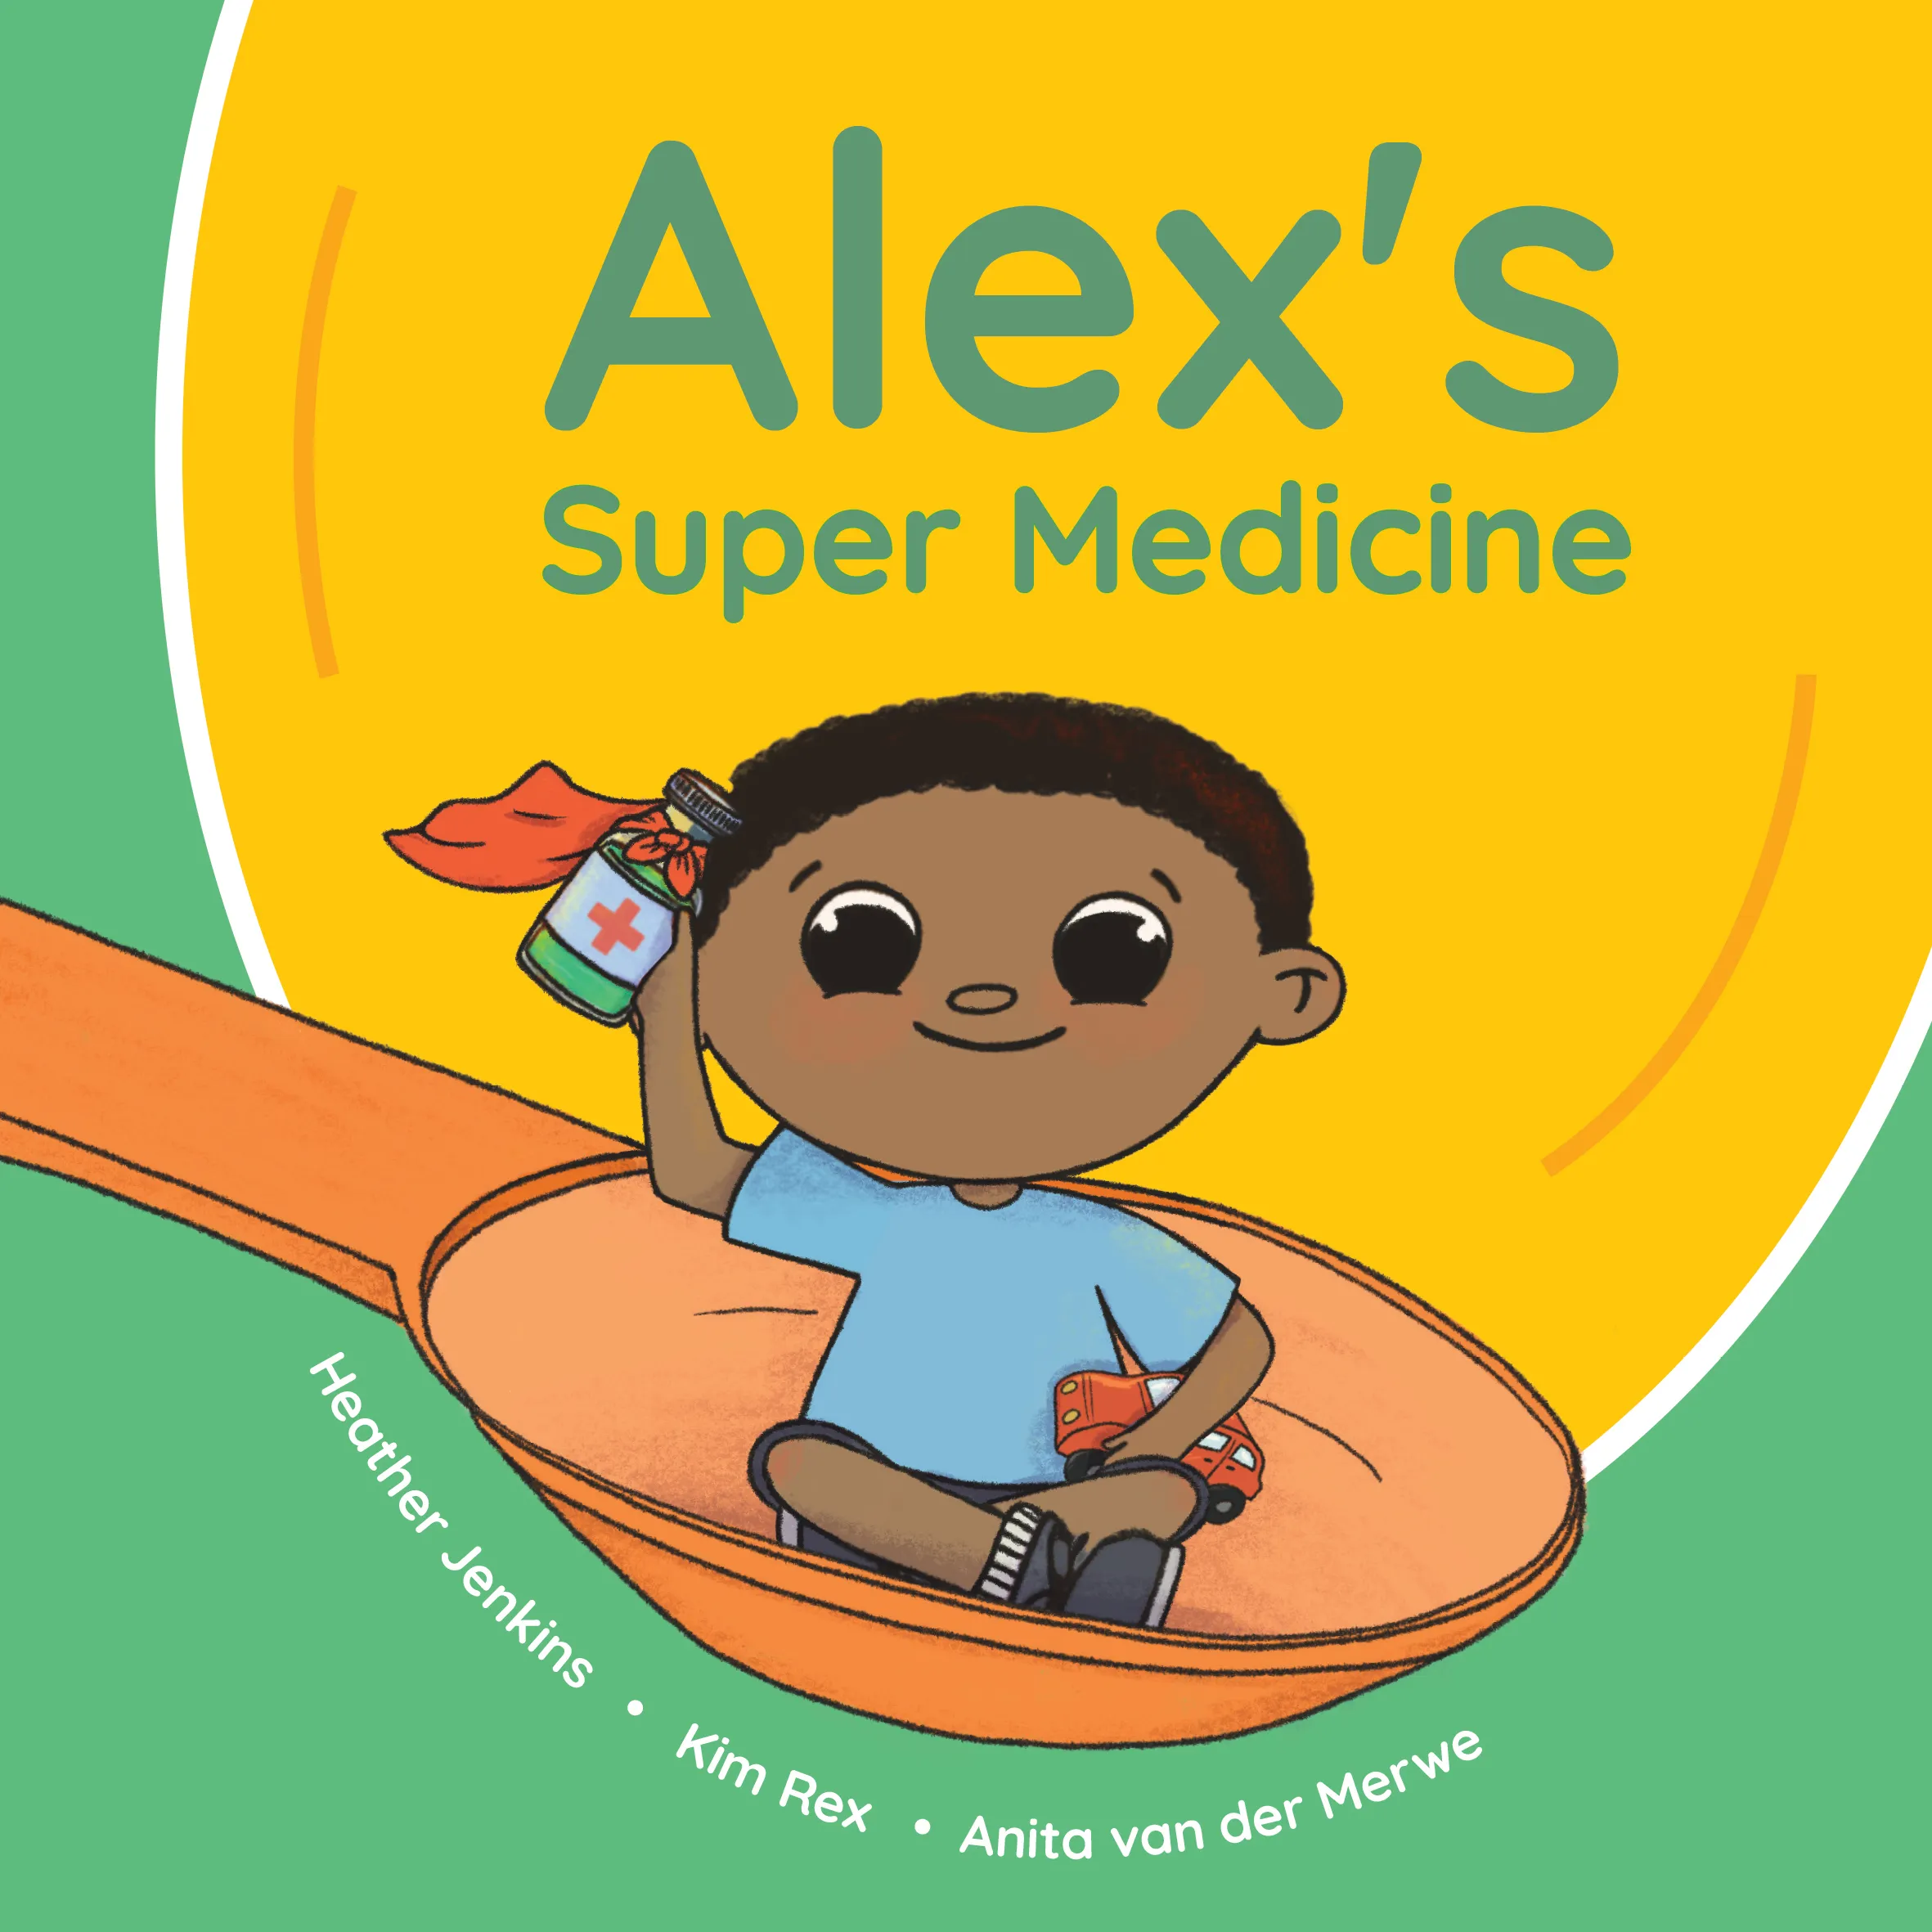 Alex's Super Medicine